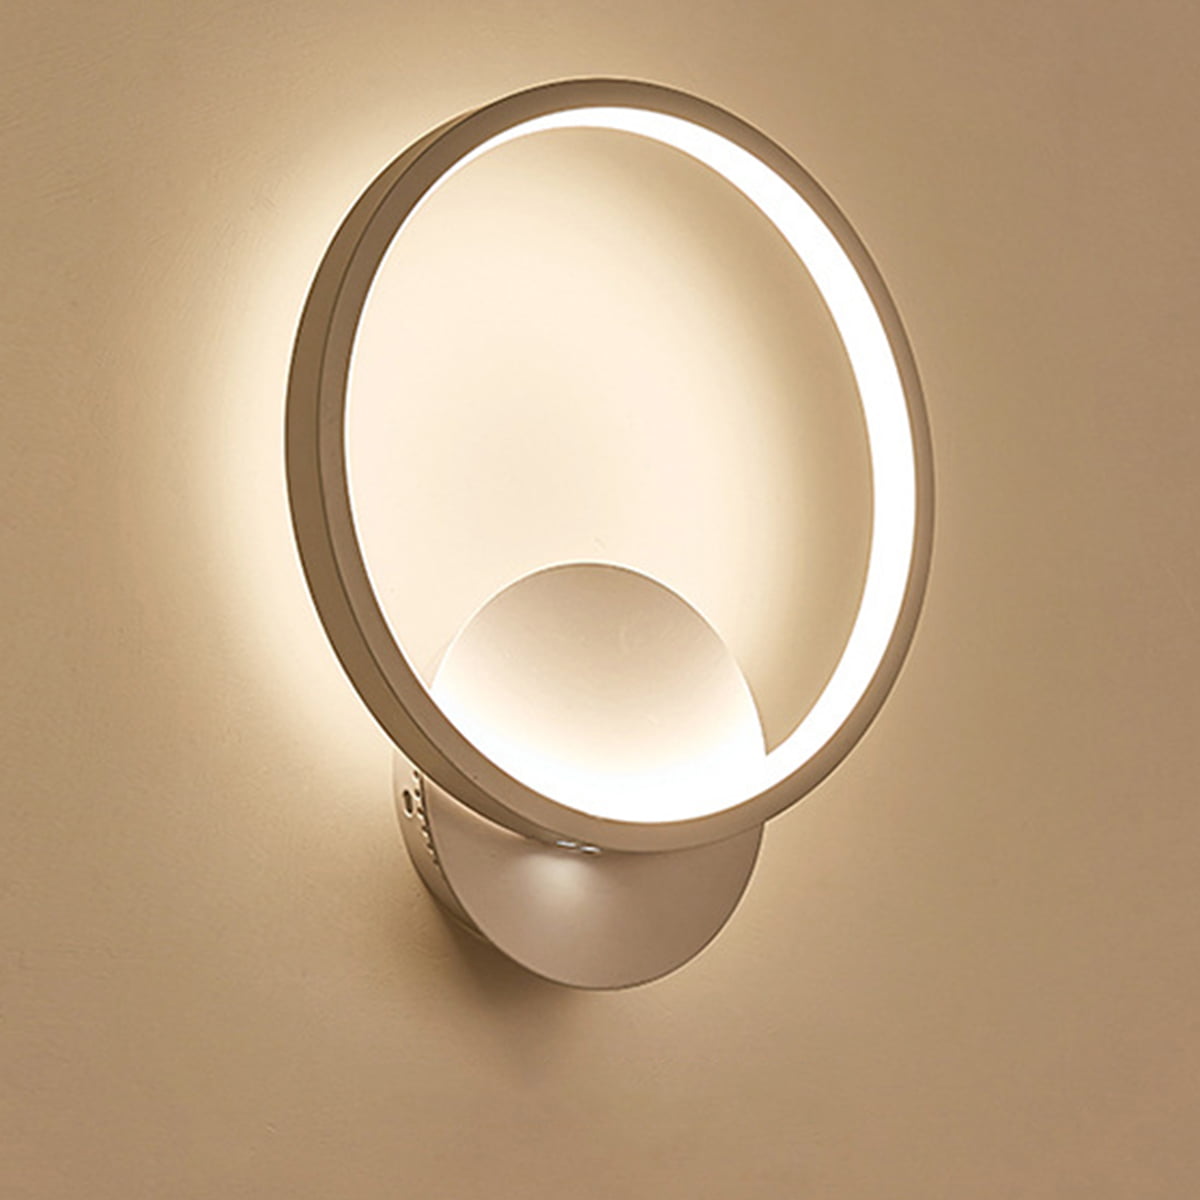 9W Modern LED Wall Lighting Fixture Lamps Bedroom Light Warm White